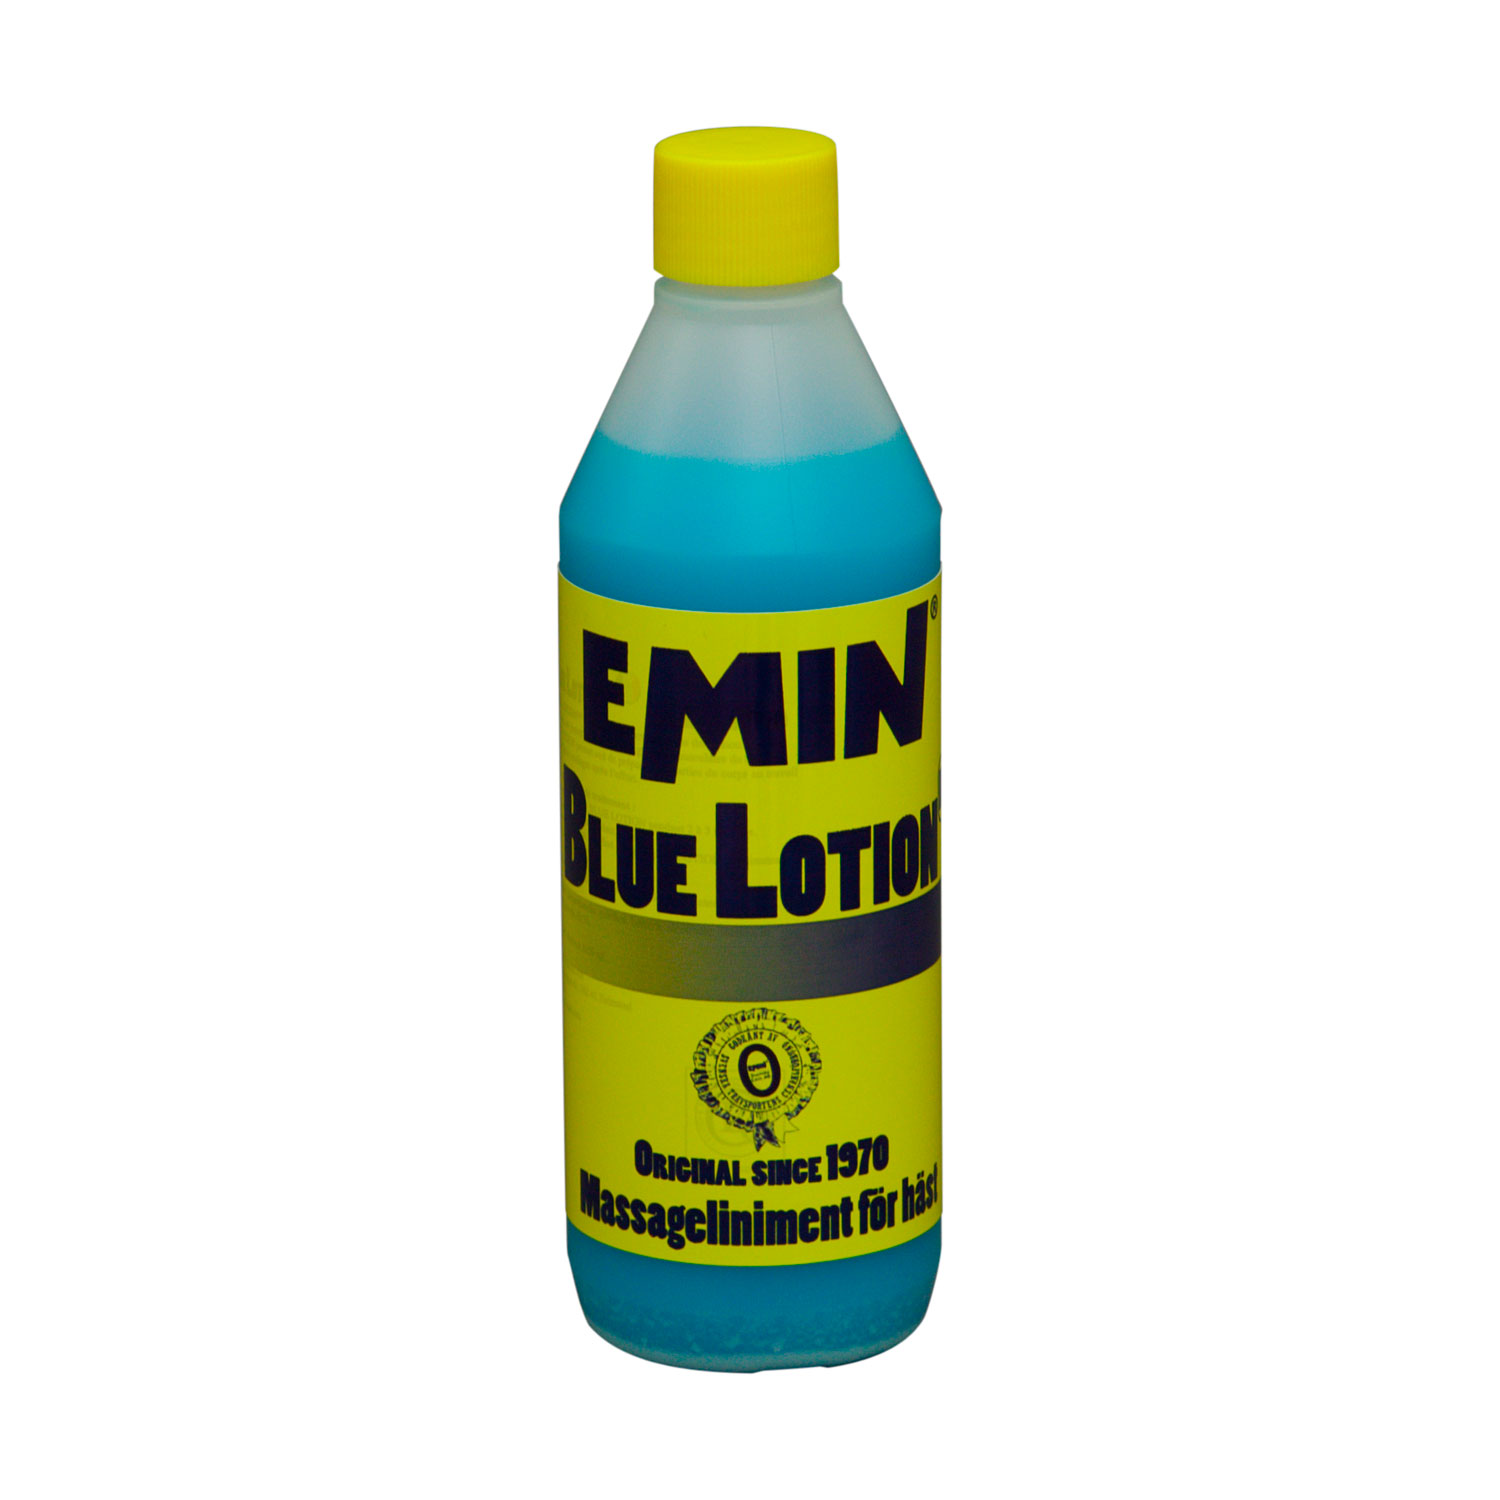 Blue lotion EMIN, 520 ml